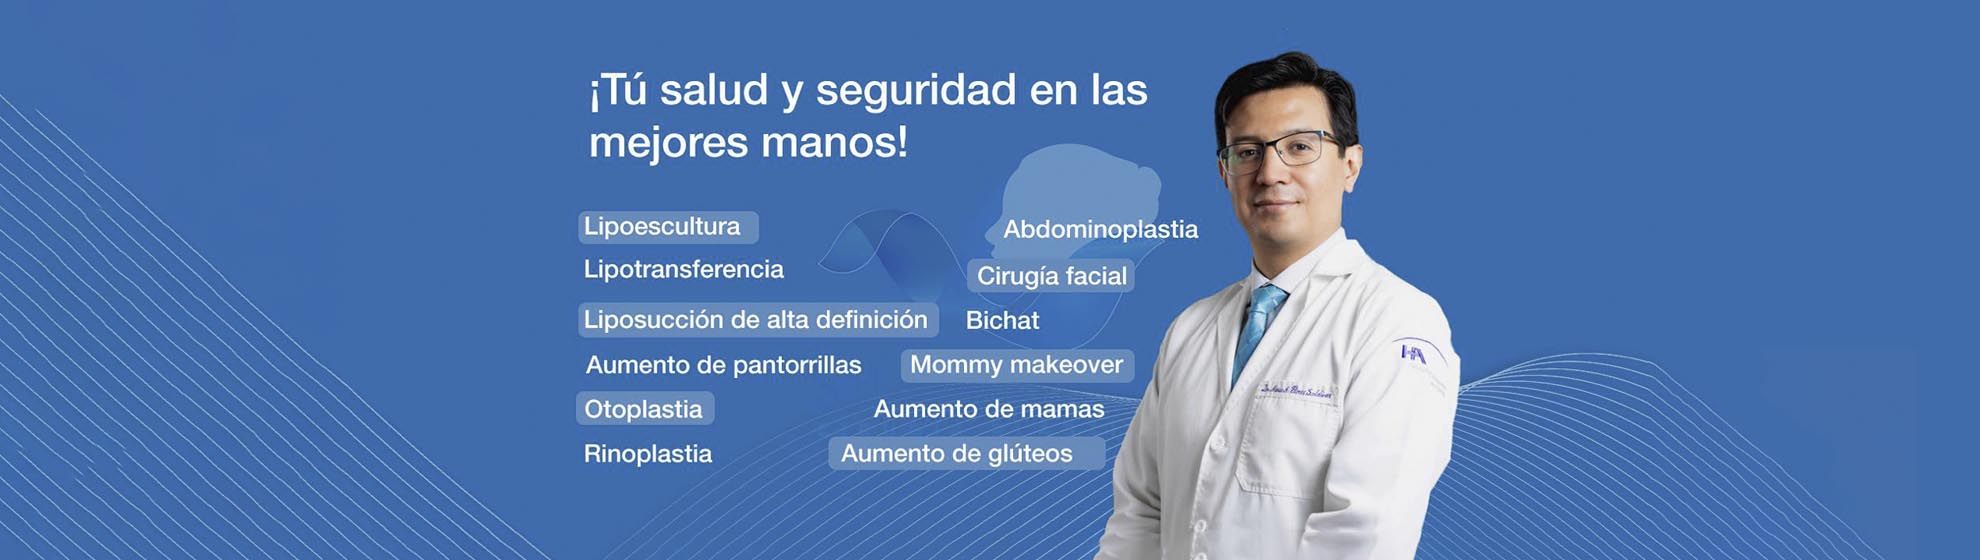 Dr. Mario Alonso Flores Saldivar